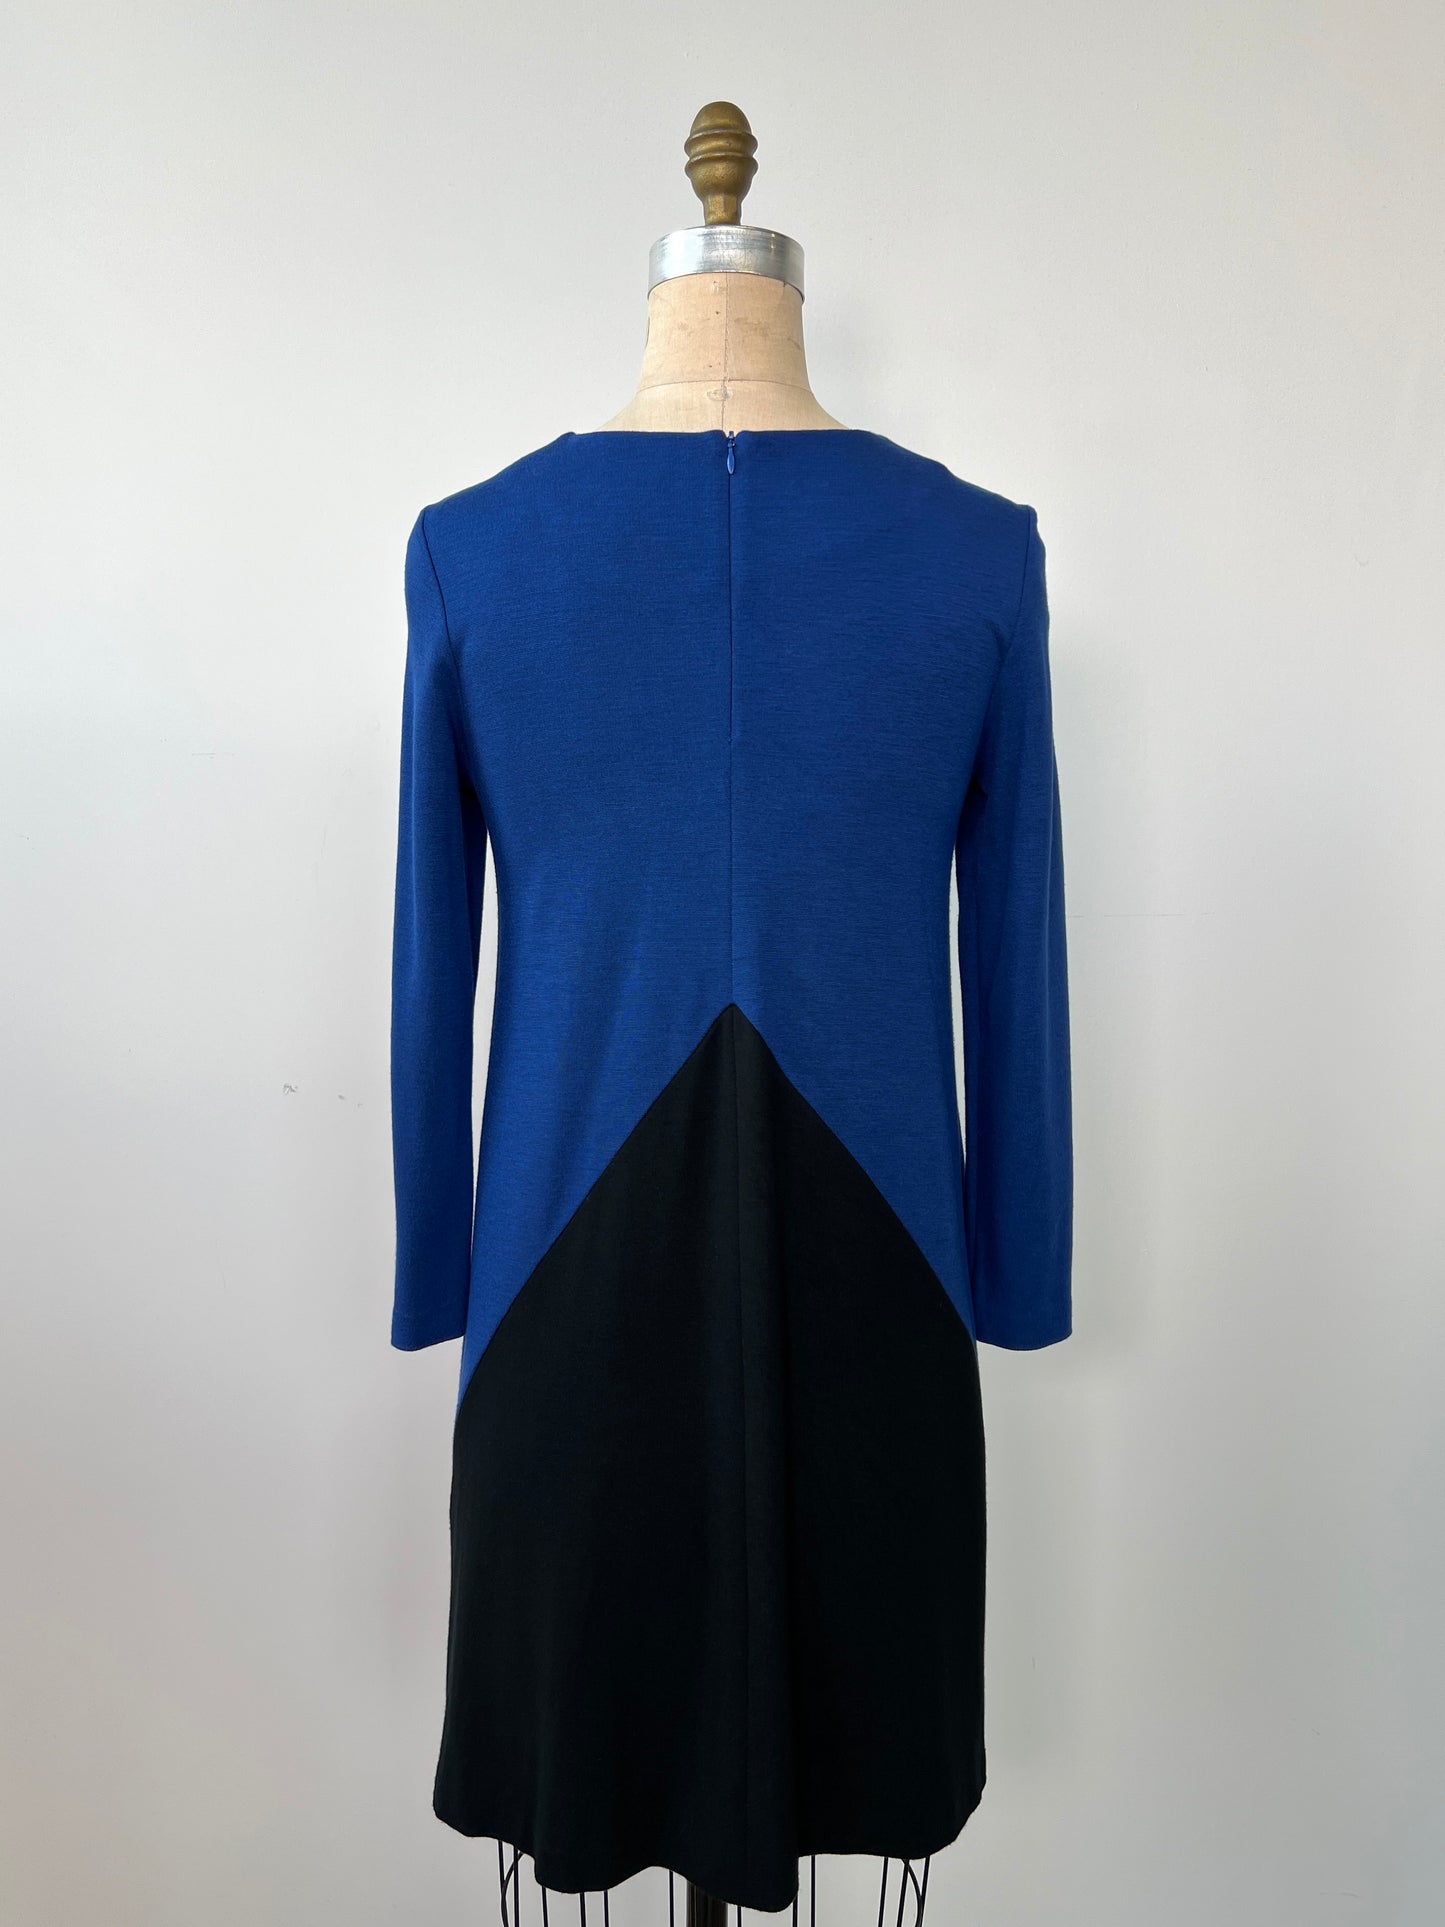 Robe évasée en tricot bleu cobalt et noir (XS)